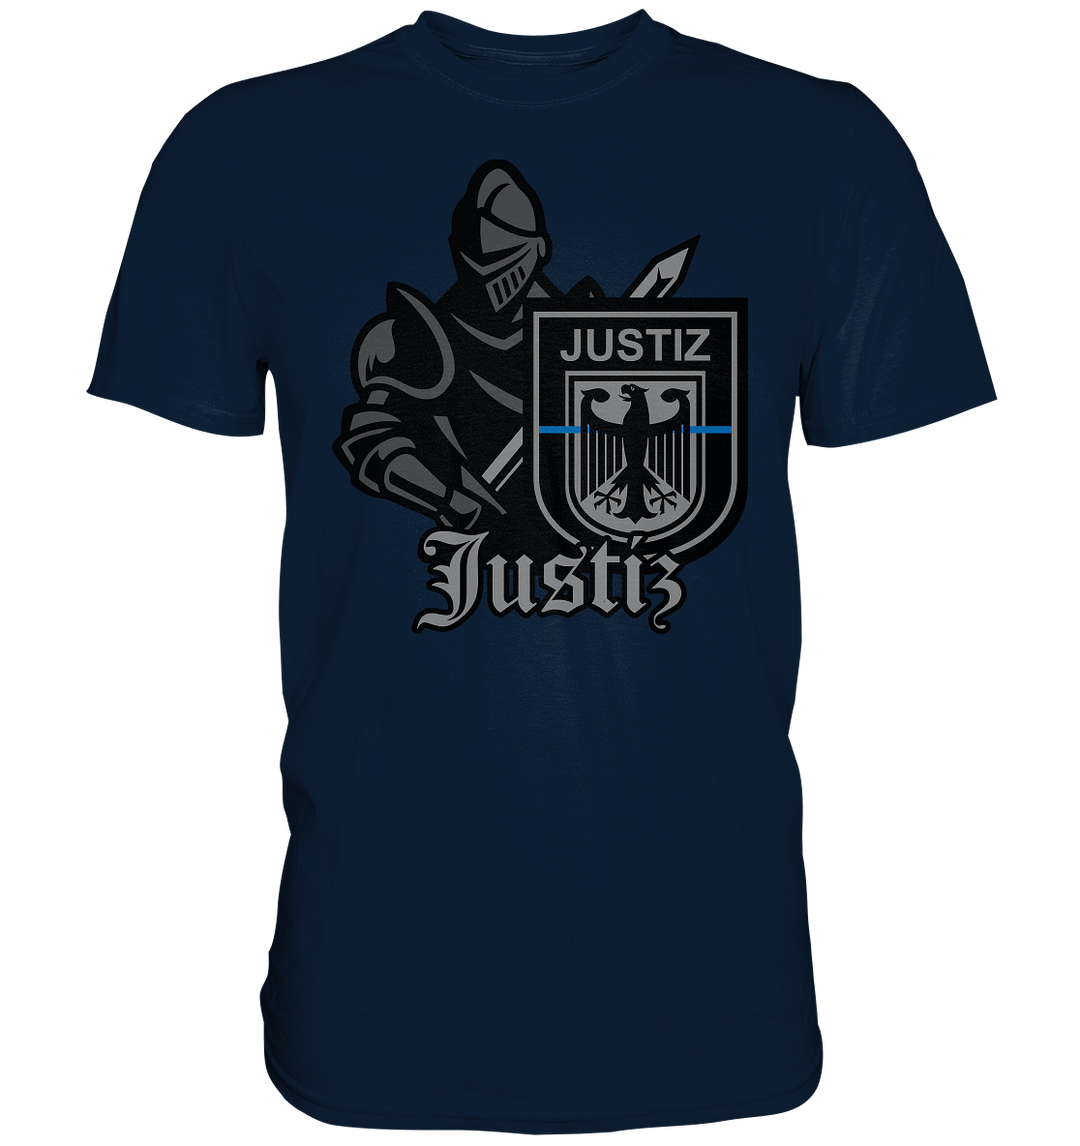 "Justiz - Ritter" - Premium Shirt